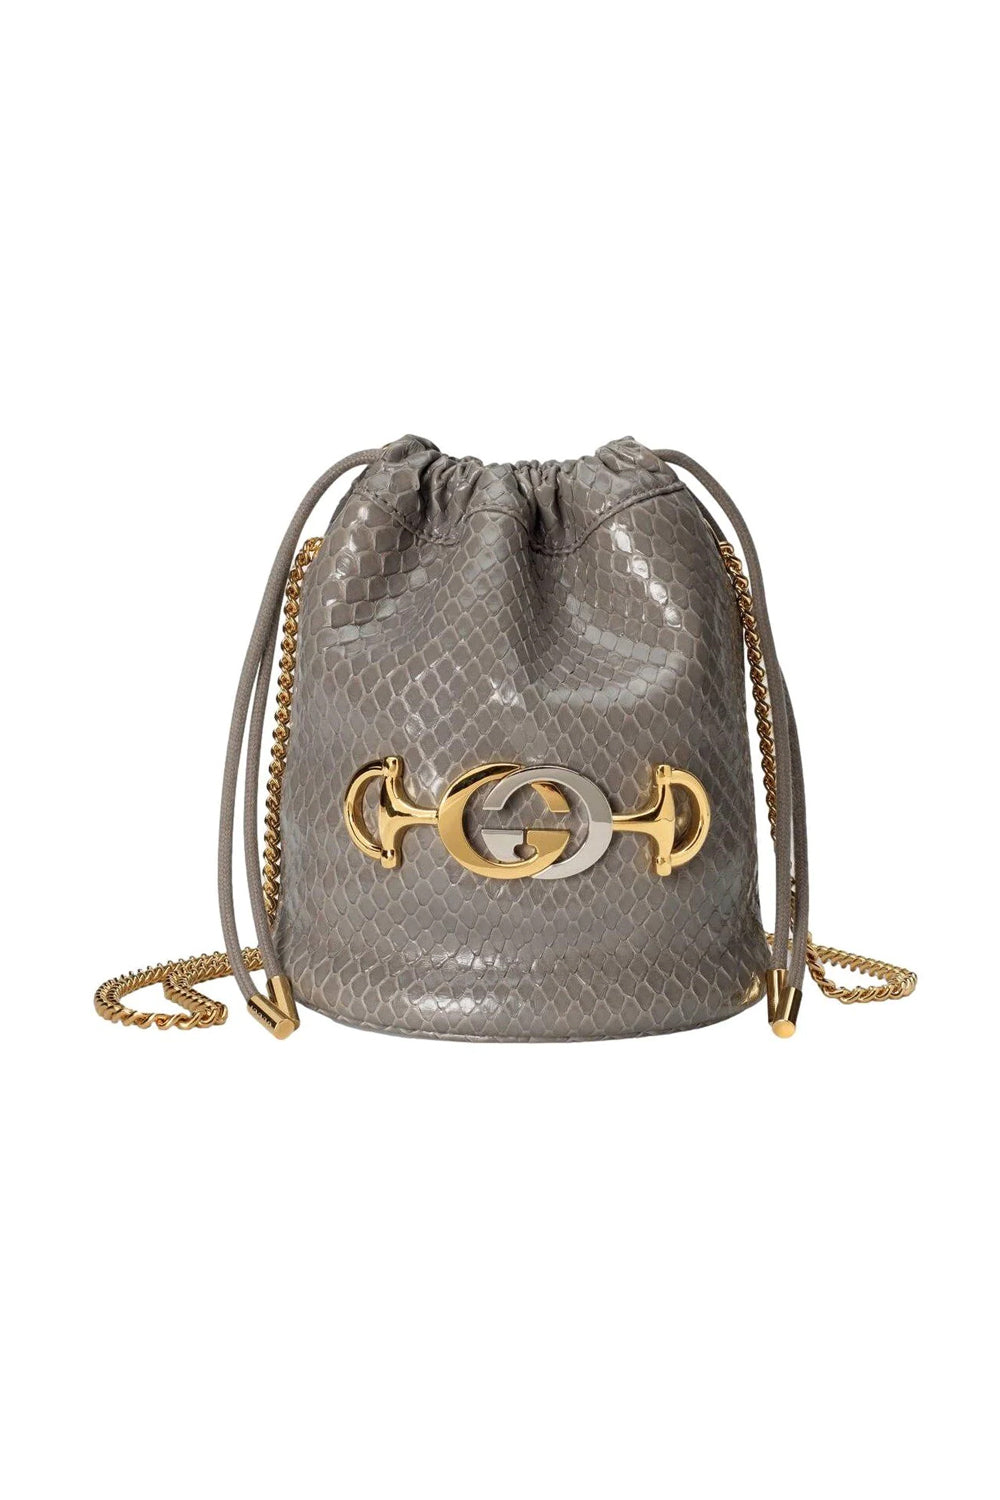 Gucci Snakeskin Drawstring Crossbody Bucket Bag